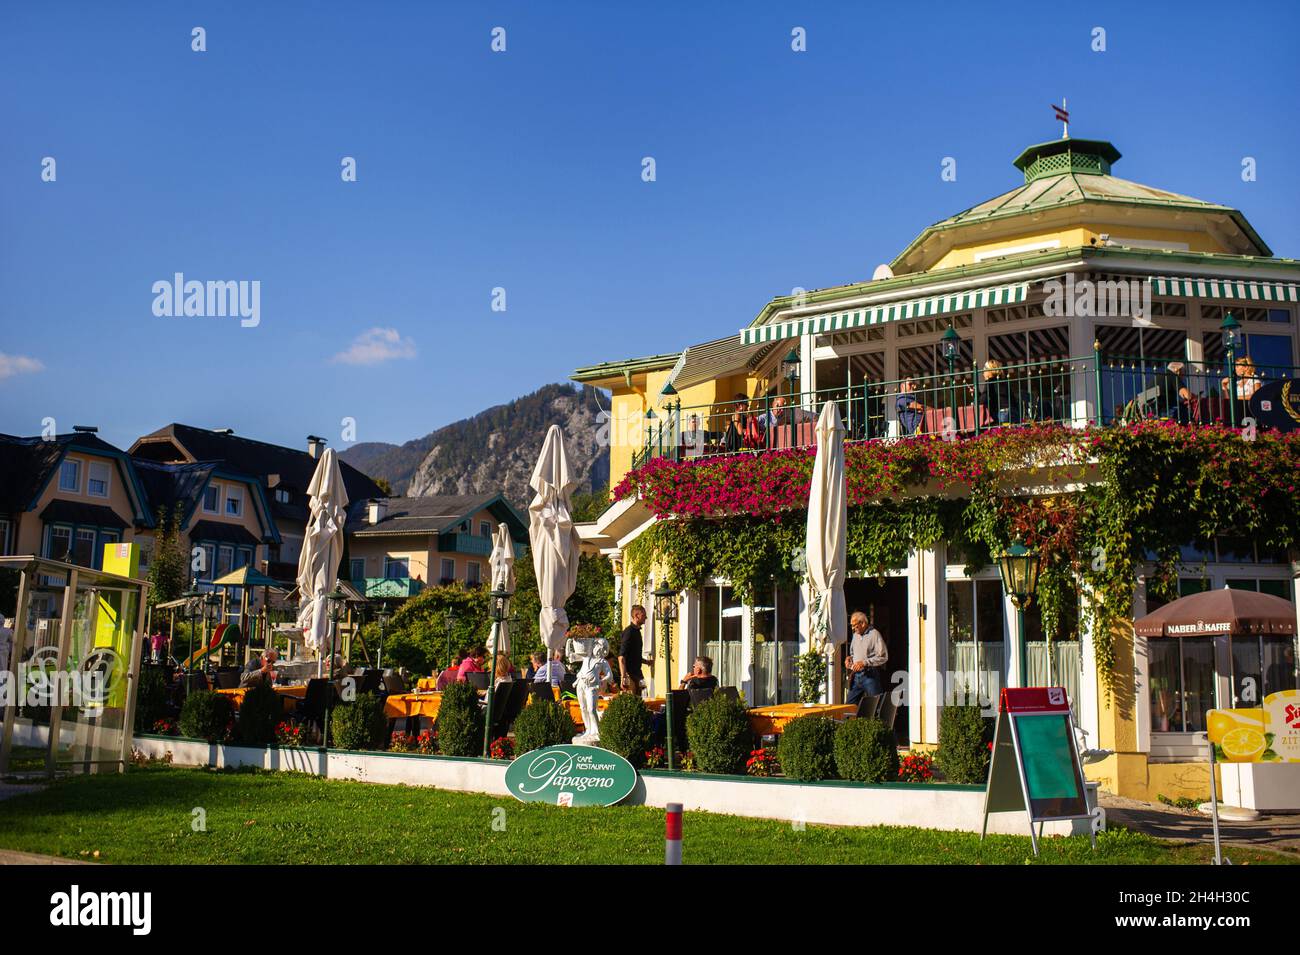 October 8, 2018.Salzkammergut, Austria. Pap geno Cafe in the city center in the Salzkammergut Alps. Stock Photo